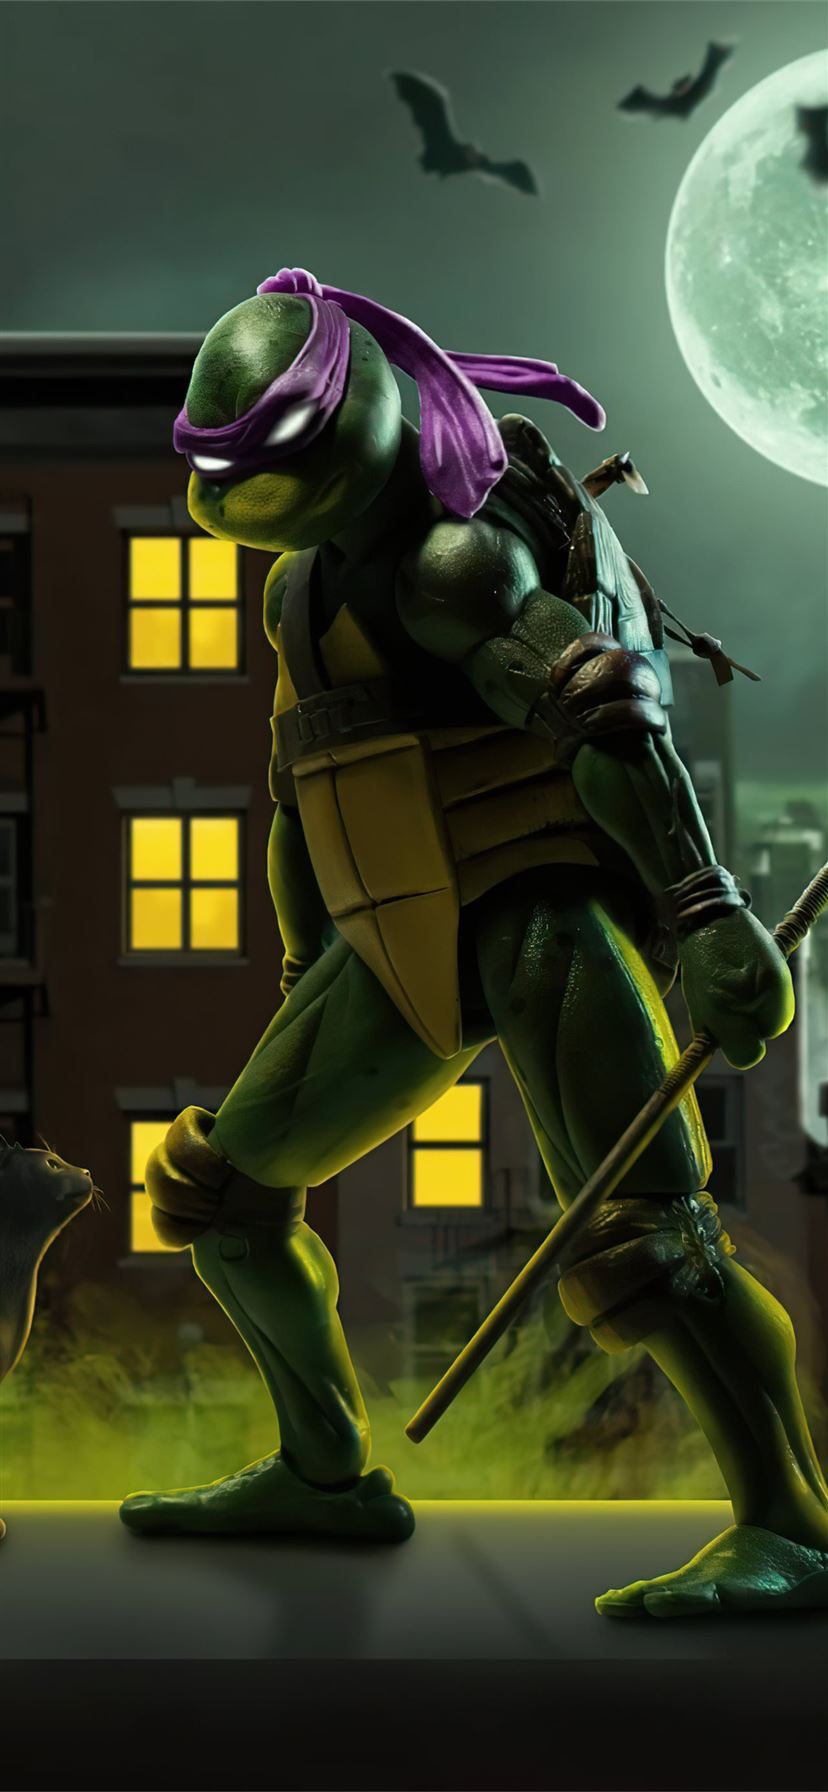 Donatello Teenage Mutant Ninja Turtles 5k iPhone Wallpaper